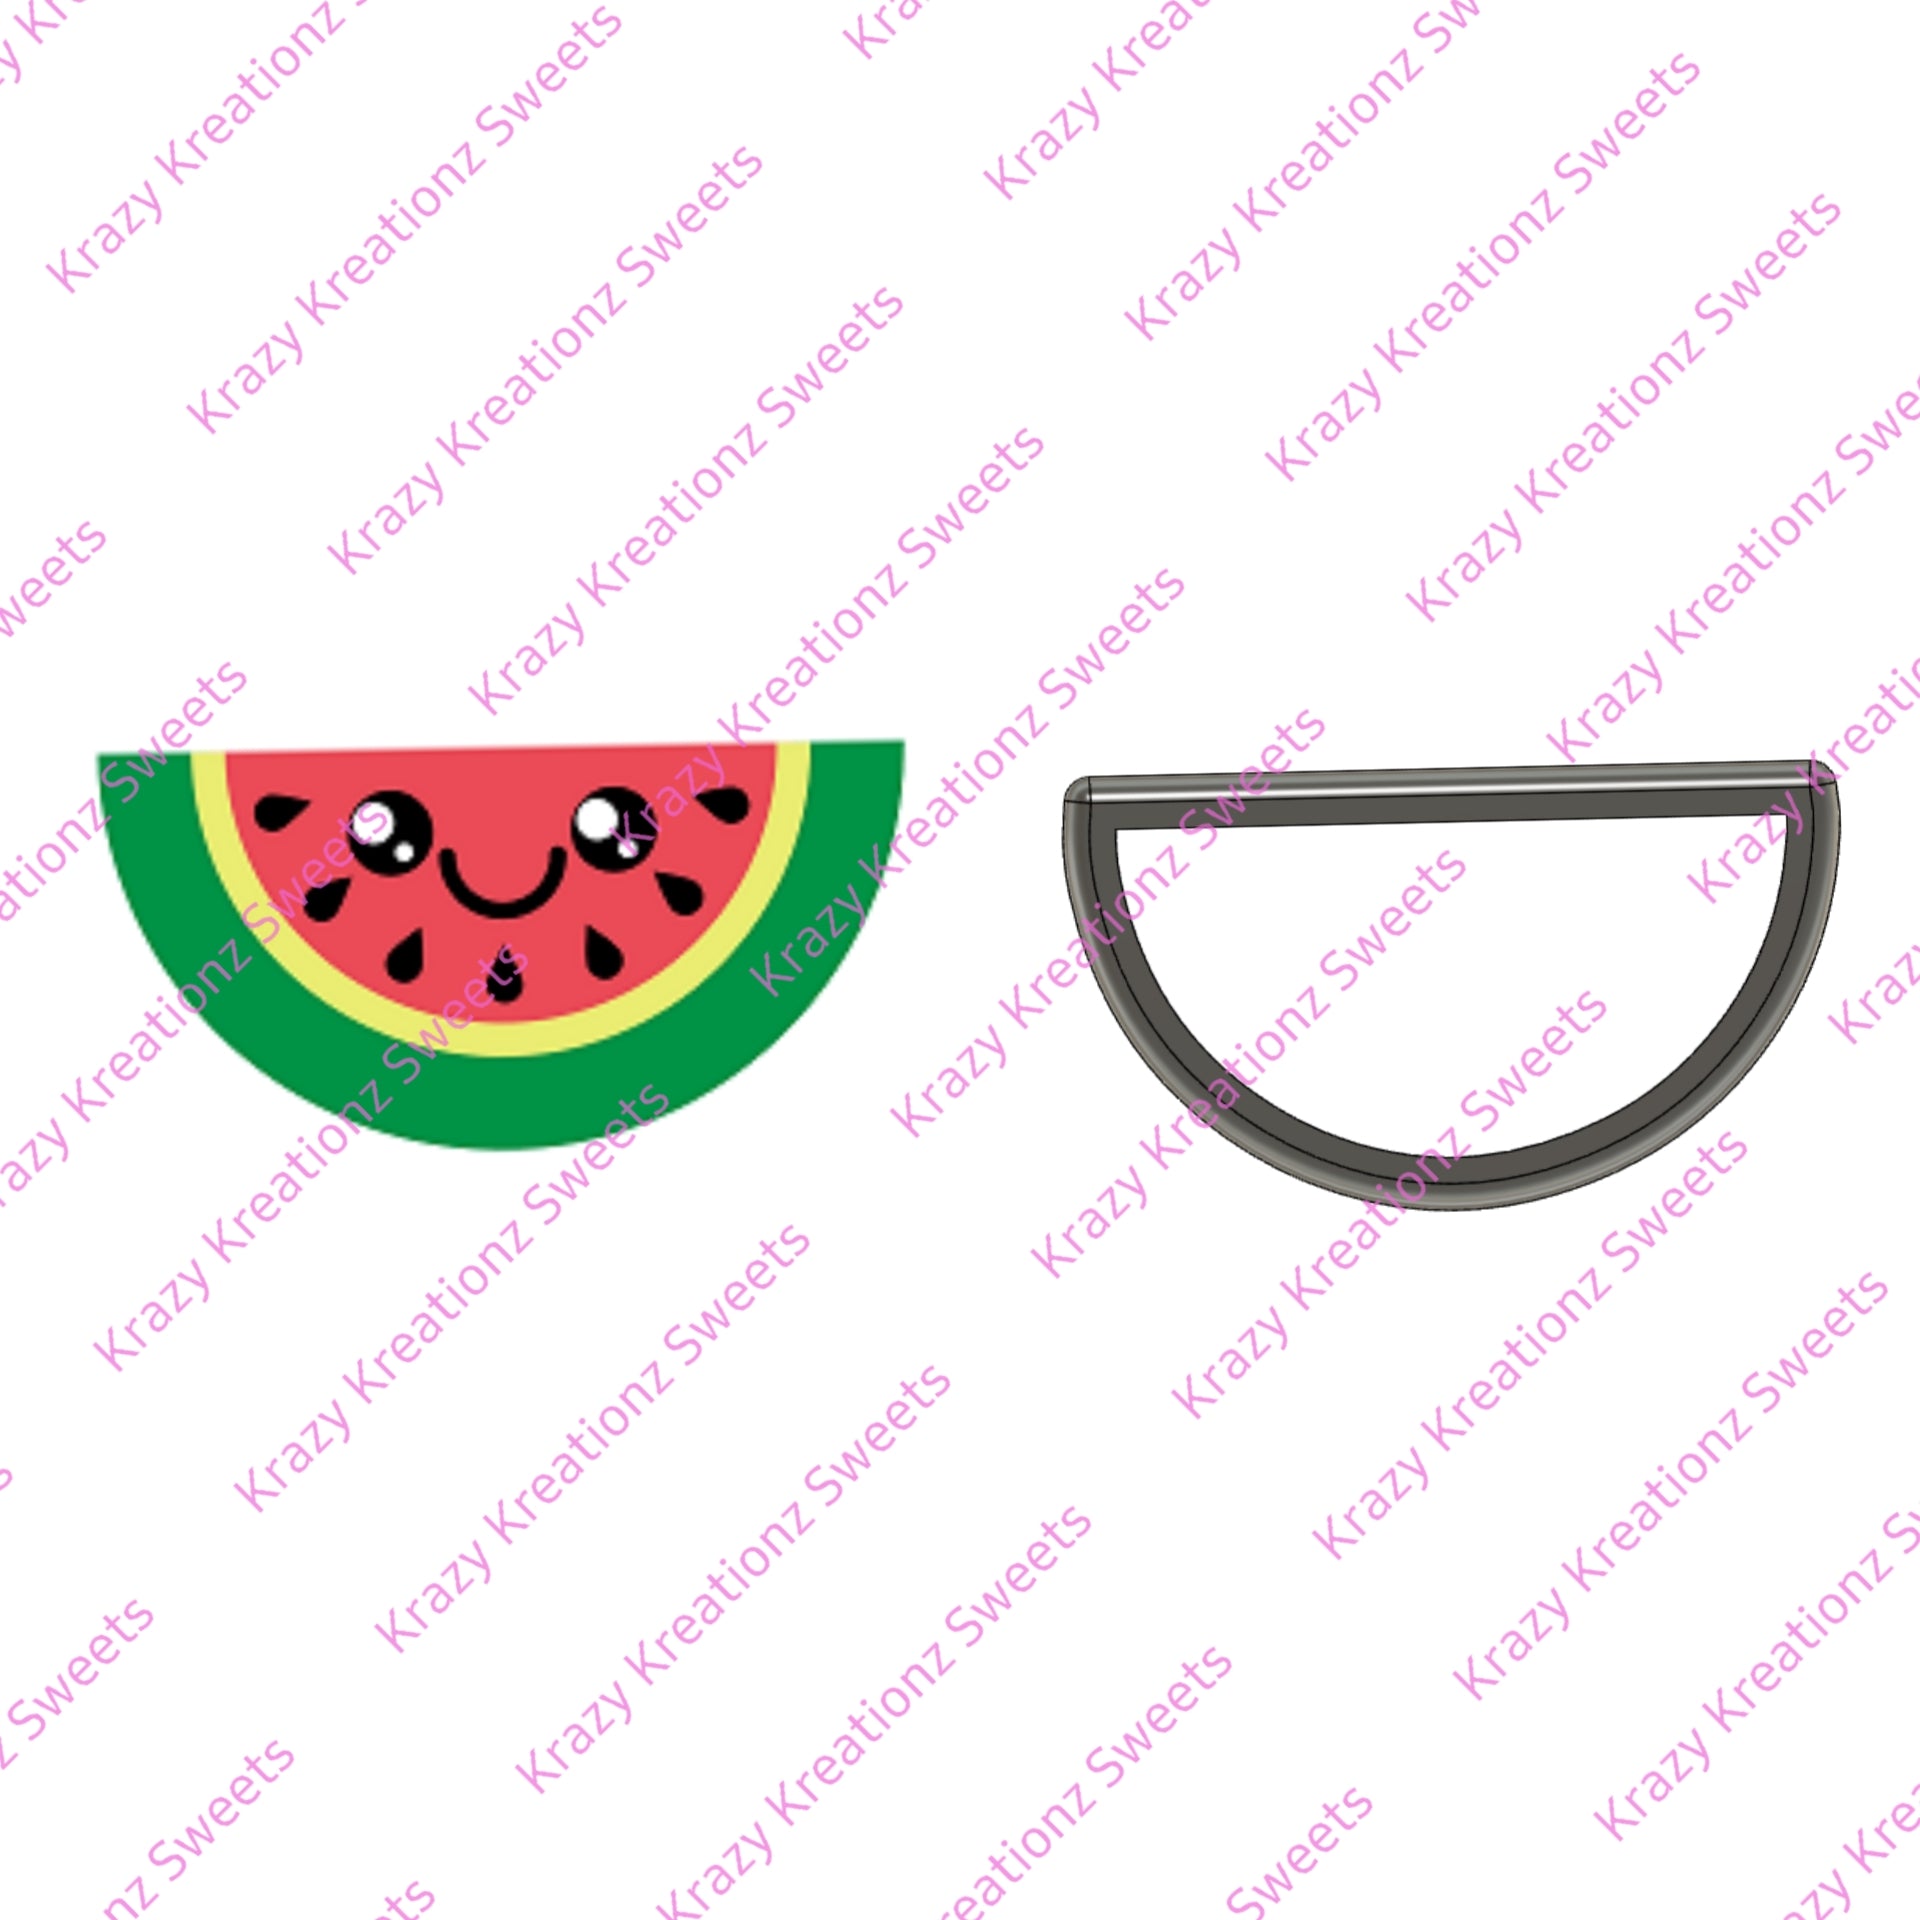 Smiley Watermelon Slice Cookie Cutter